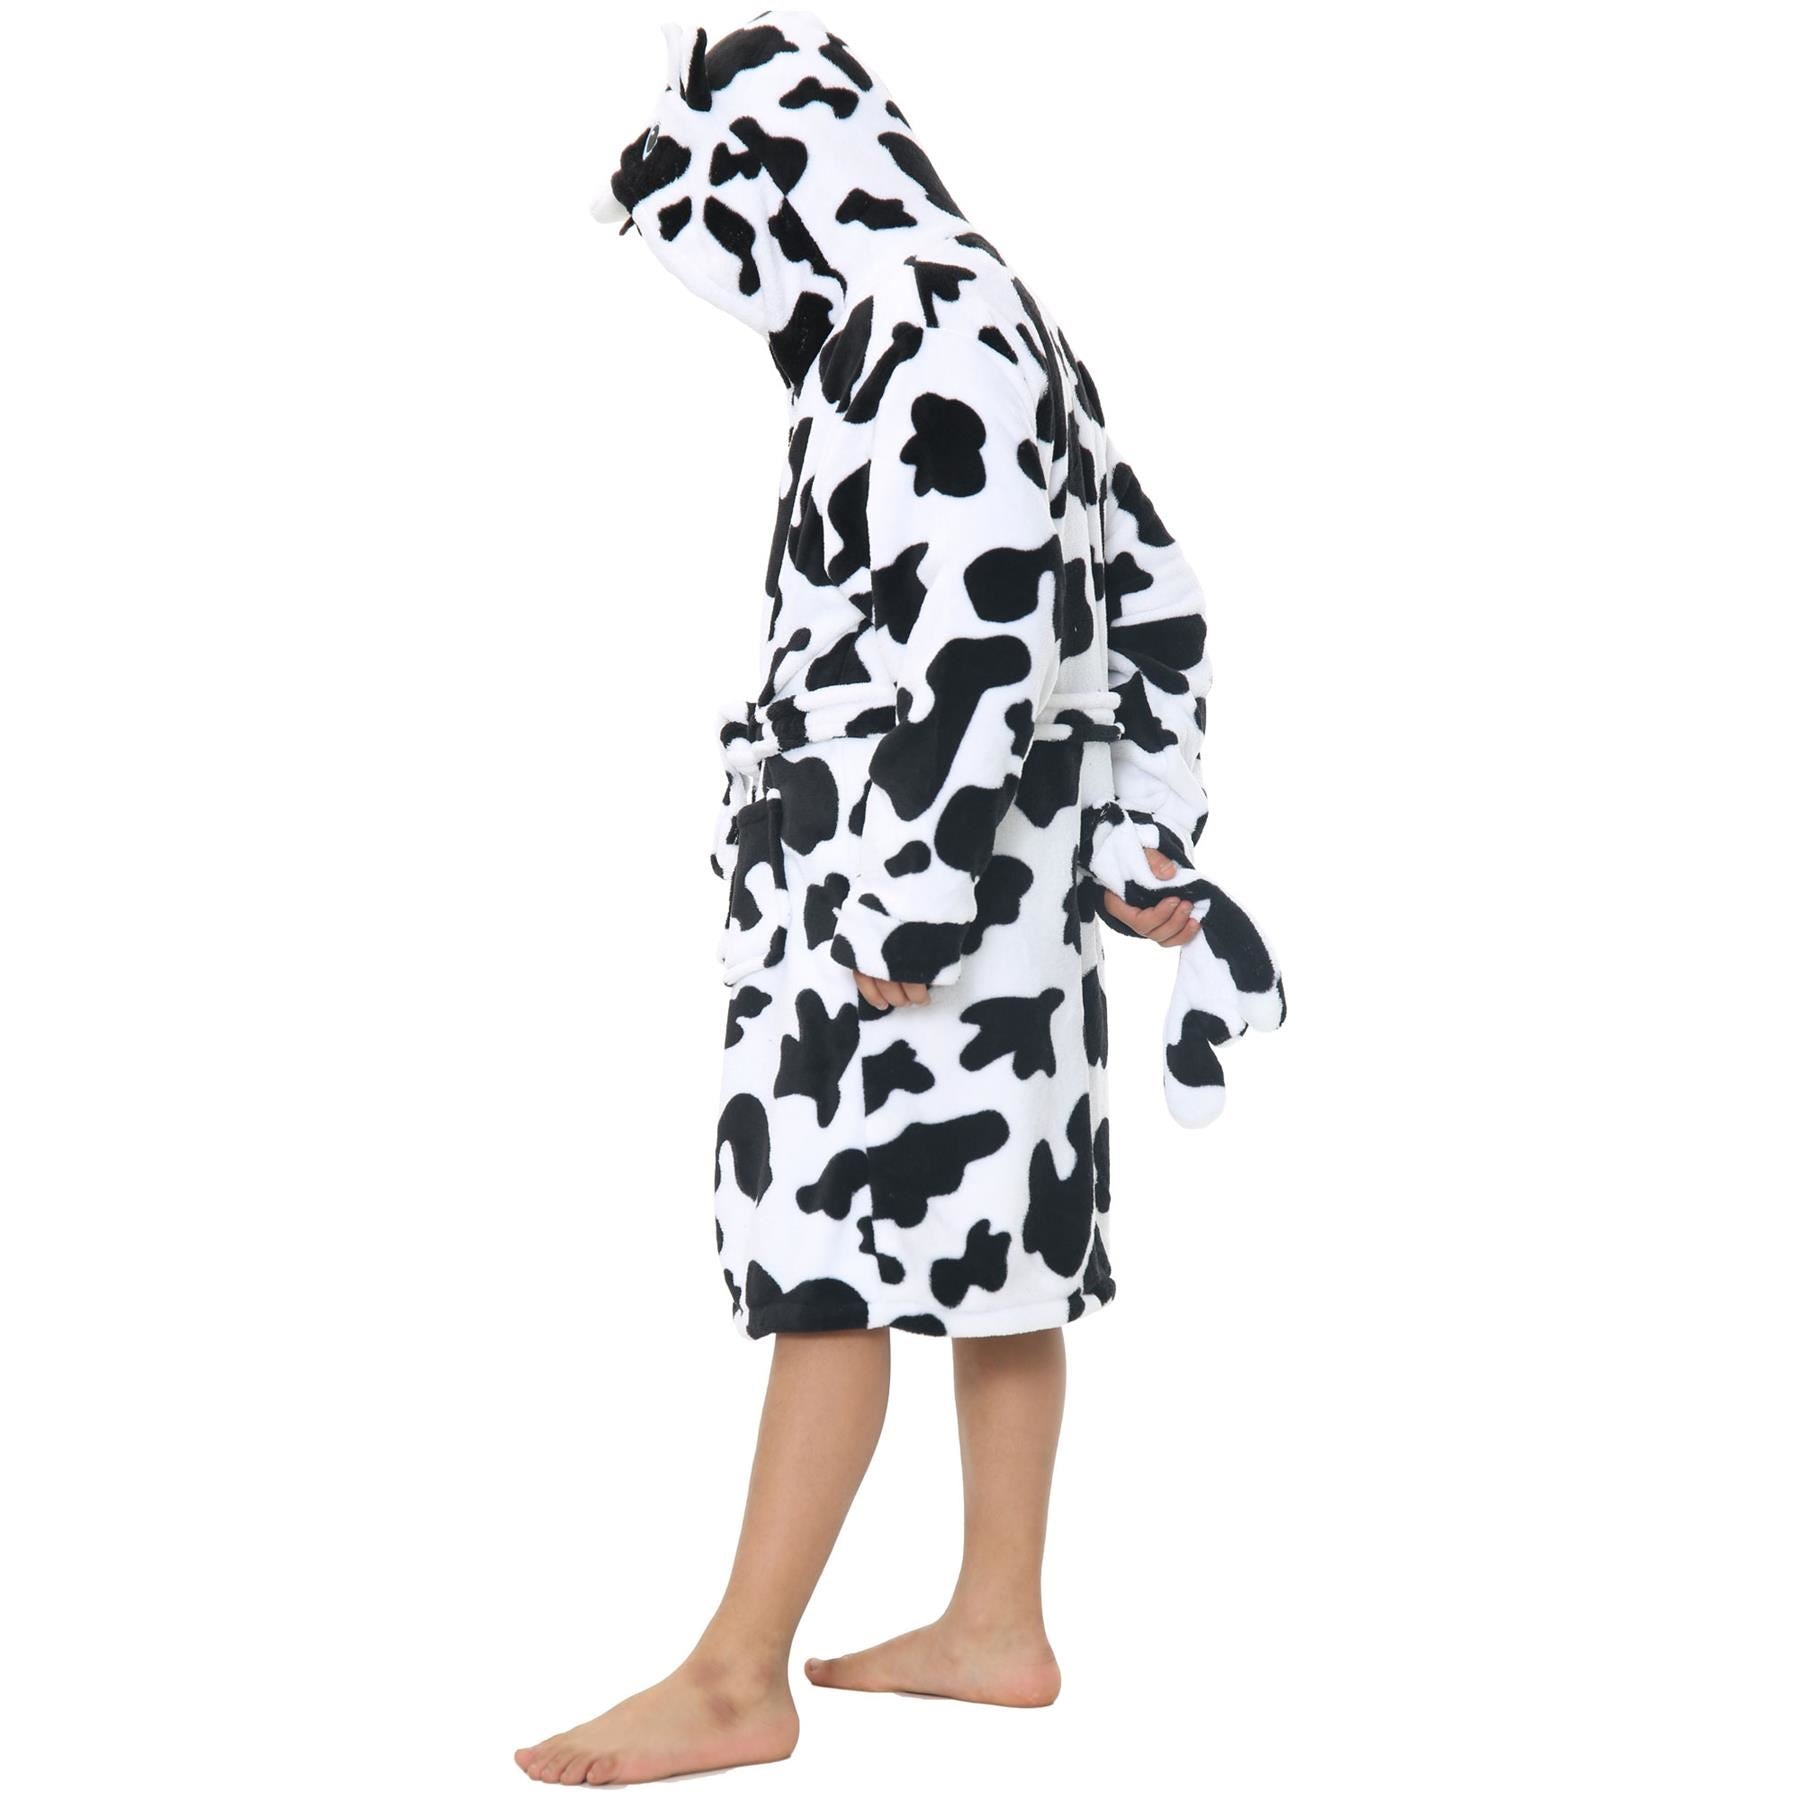 Kids Girls Boys Super Soft 3D Animal Cow Hooded Bathrobe